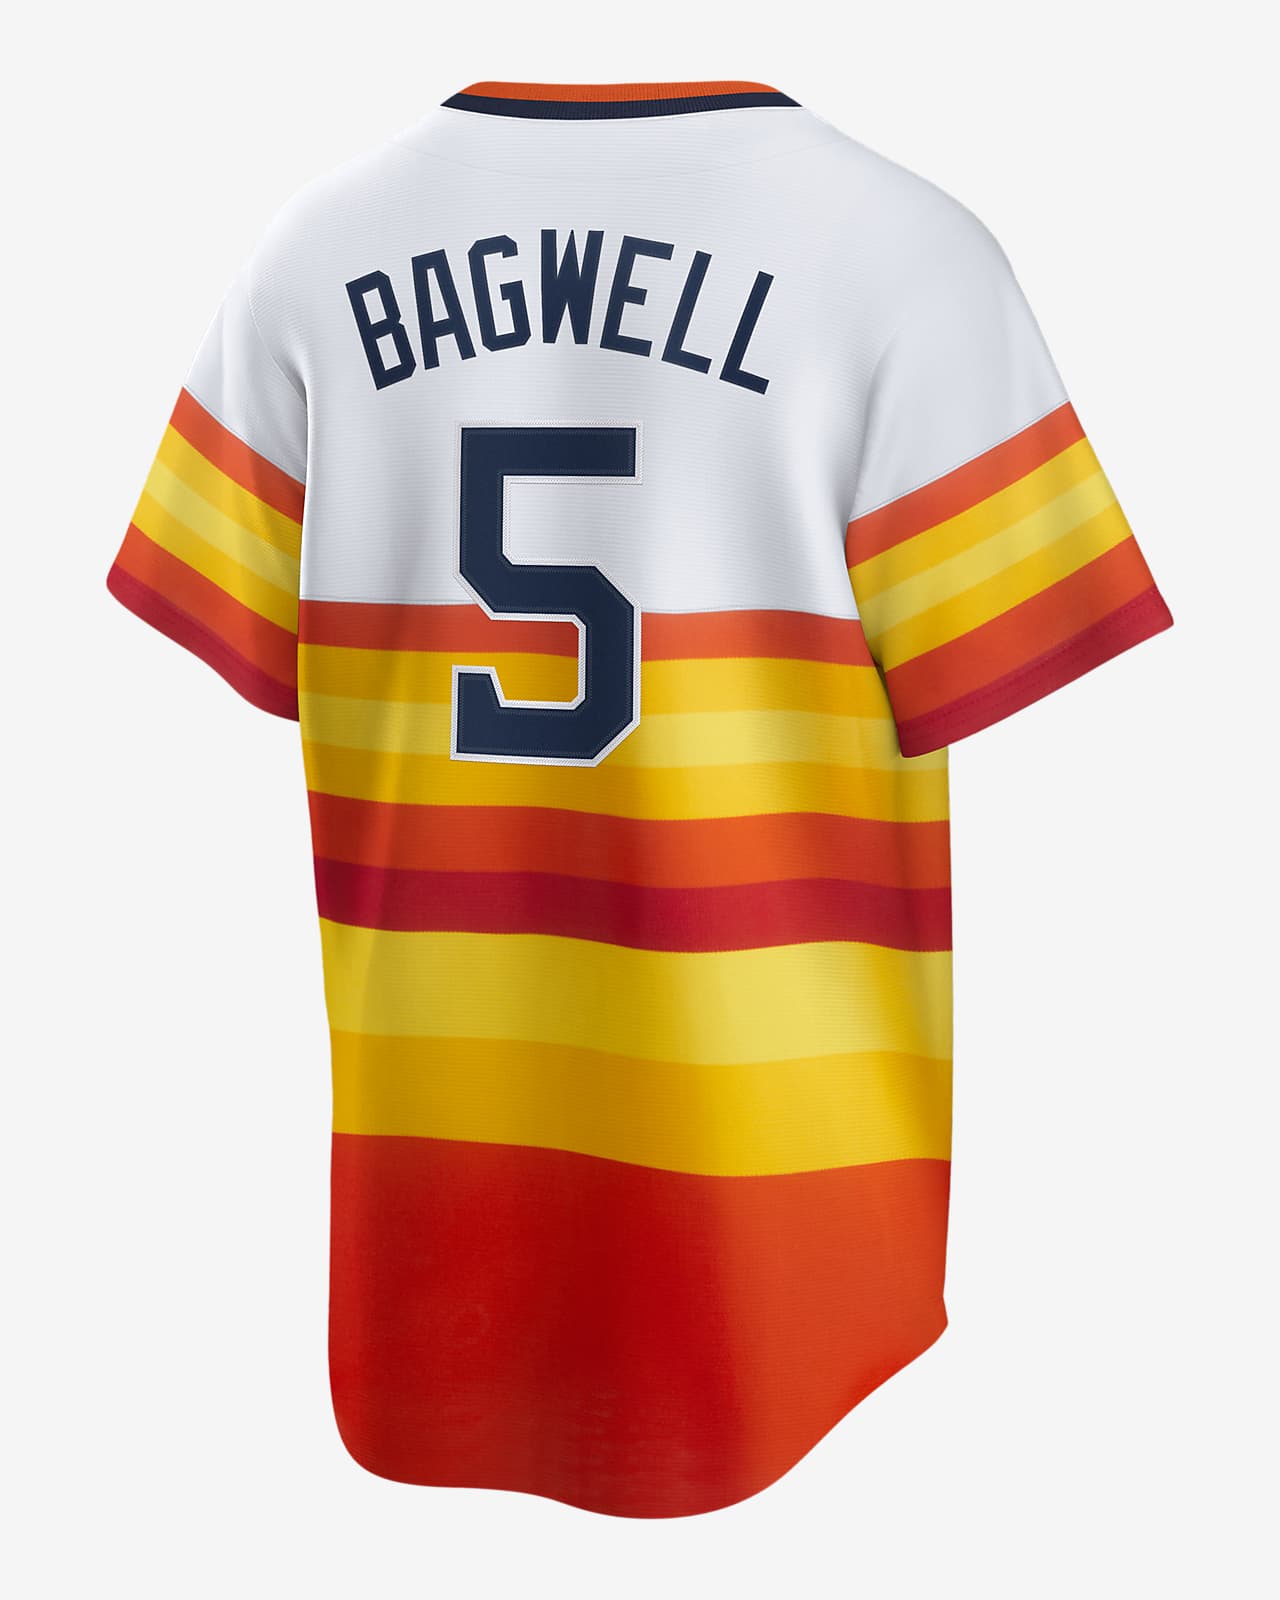 Camiseta de béisbol Cooperstown para hombre MLB Houston Astros (Jeff  Bagwell).